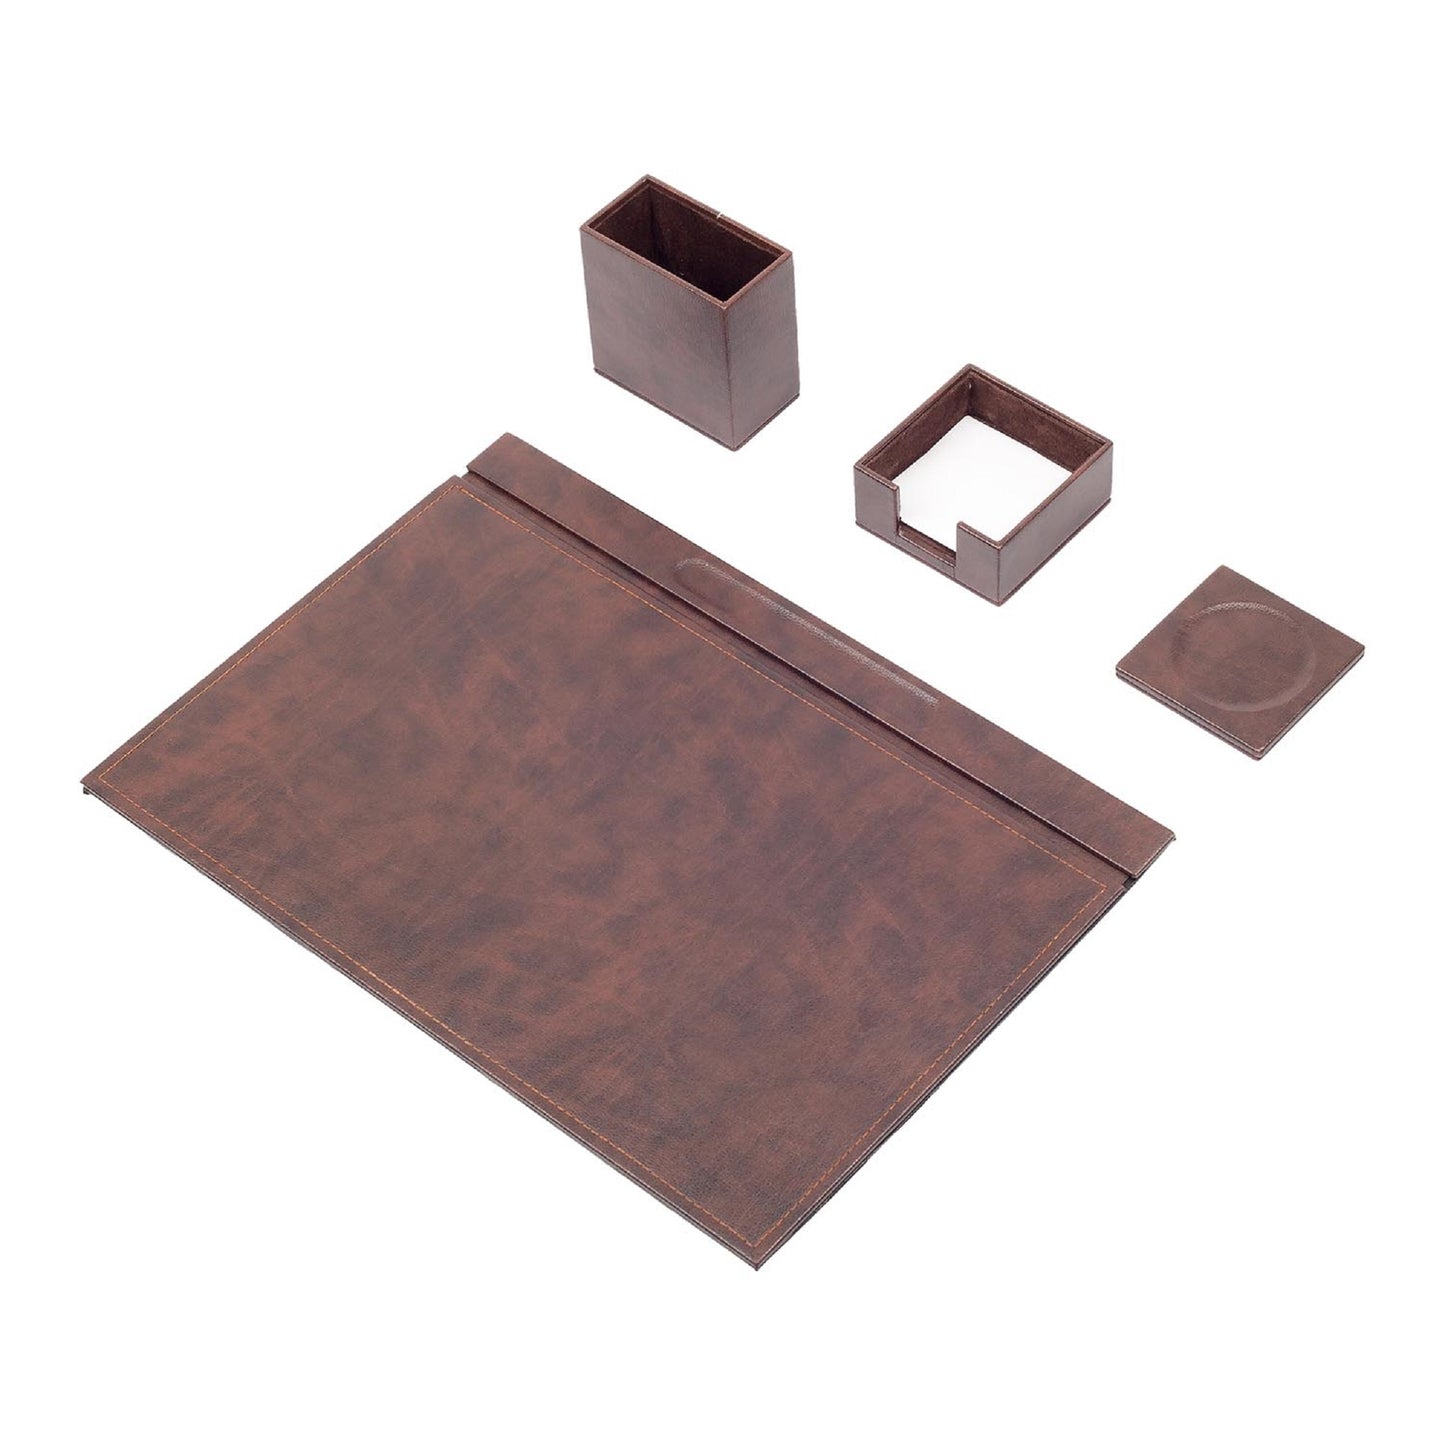 MOOG Leather Desk Set-4 Accessories-Desk Organizer-Office Desk Accessories-Office Organizer-Desk Pad-Desktop Storage - Leather Desk Pad - 4 PCS